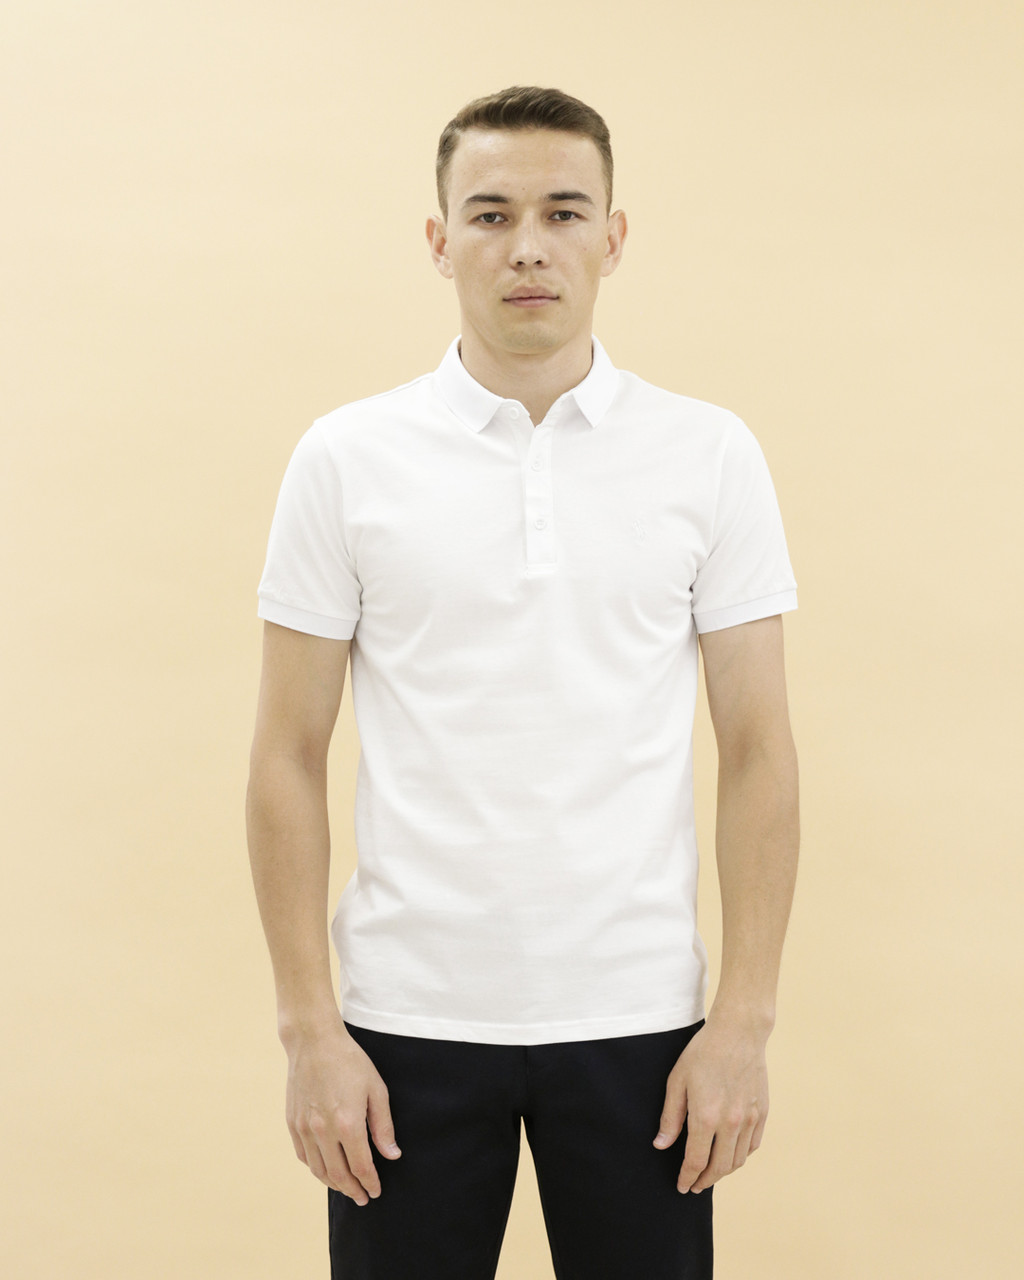 Мужская футболка «UM&H 99530863» белый, фото 1